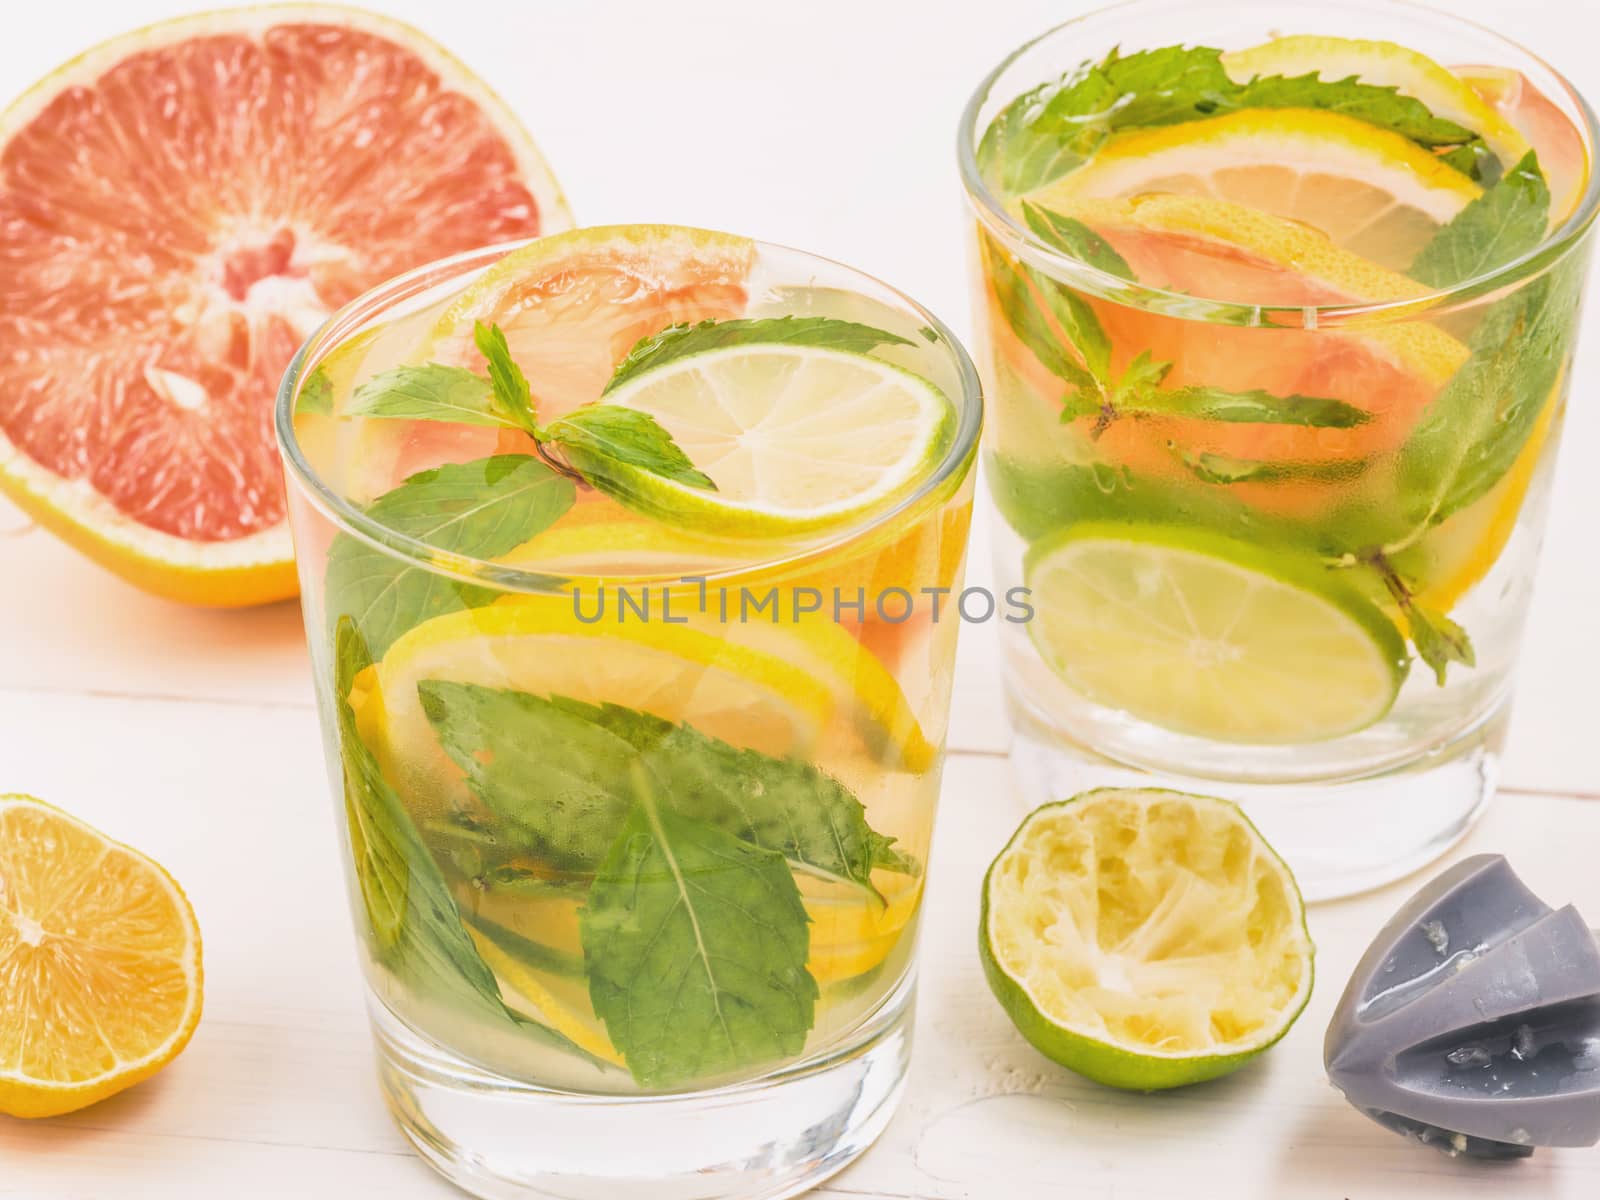 Cold homemade lemonade with fresh lemon, lime, grapefruit and mint by lemon reamer. Summer drink on white wooden background